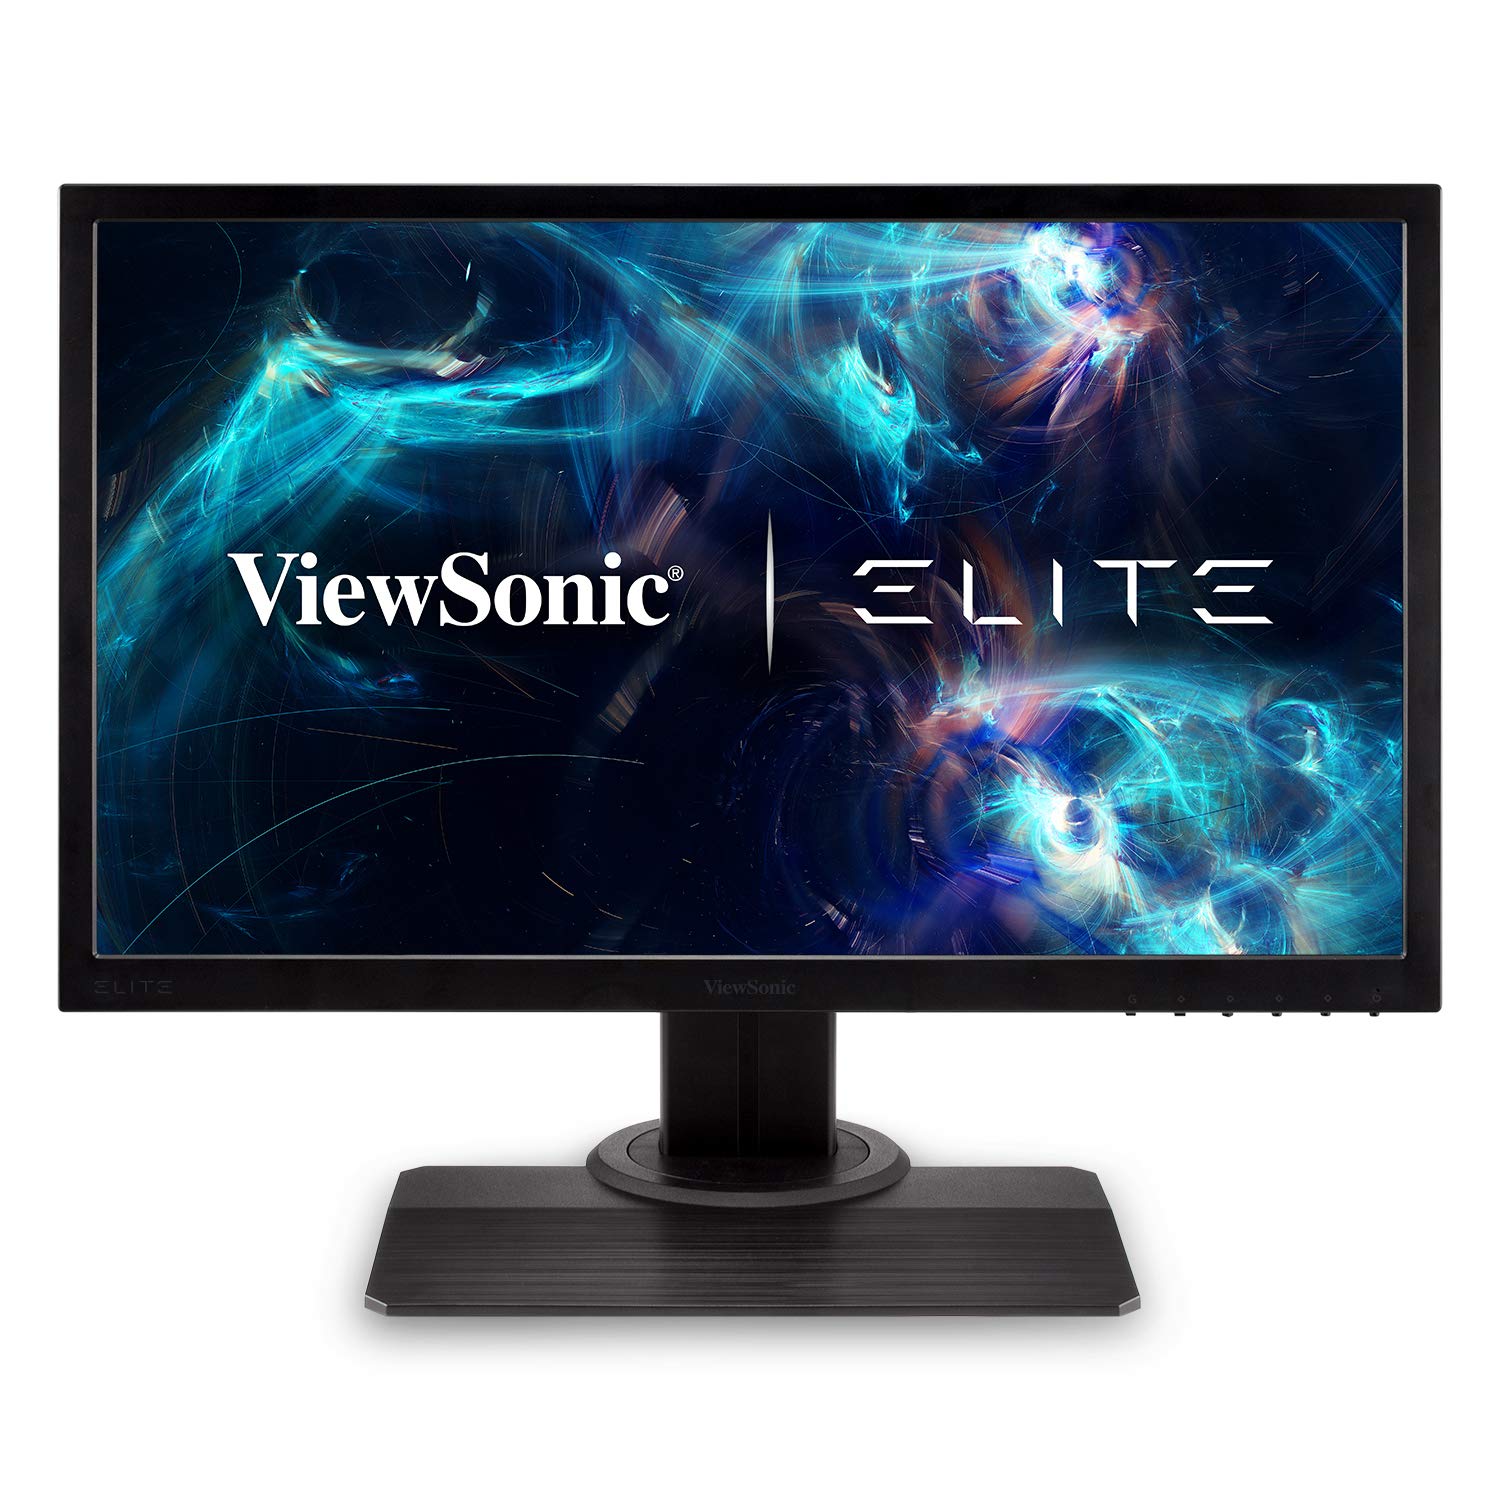 ViewSonic XG240R-S 24" 16:9 144 Hz Gaming LCD Monitor - Certified Refurbished